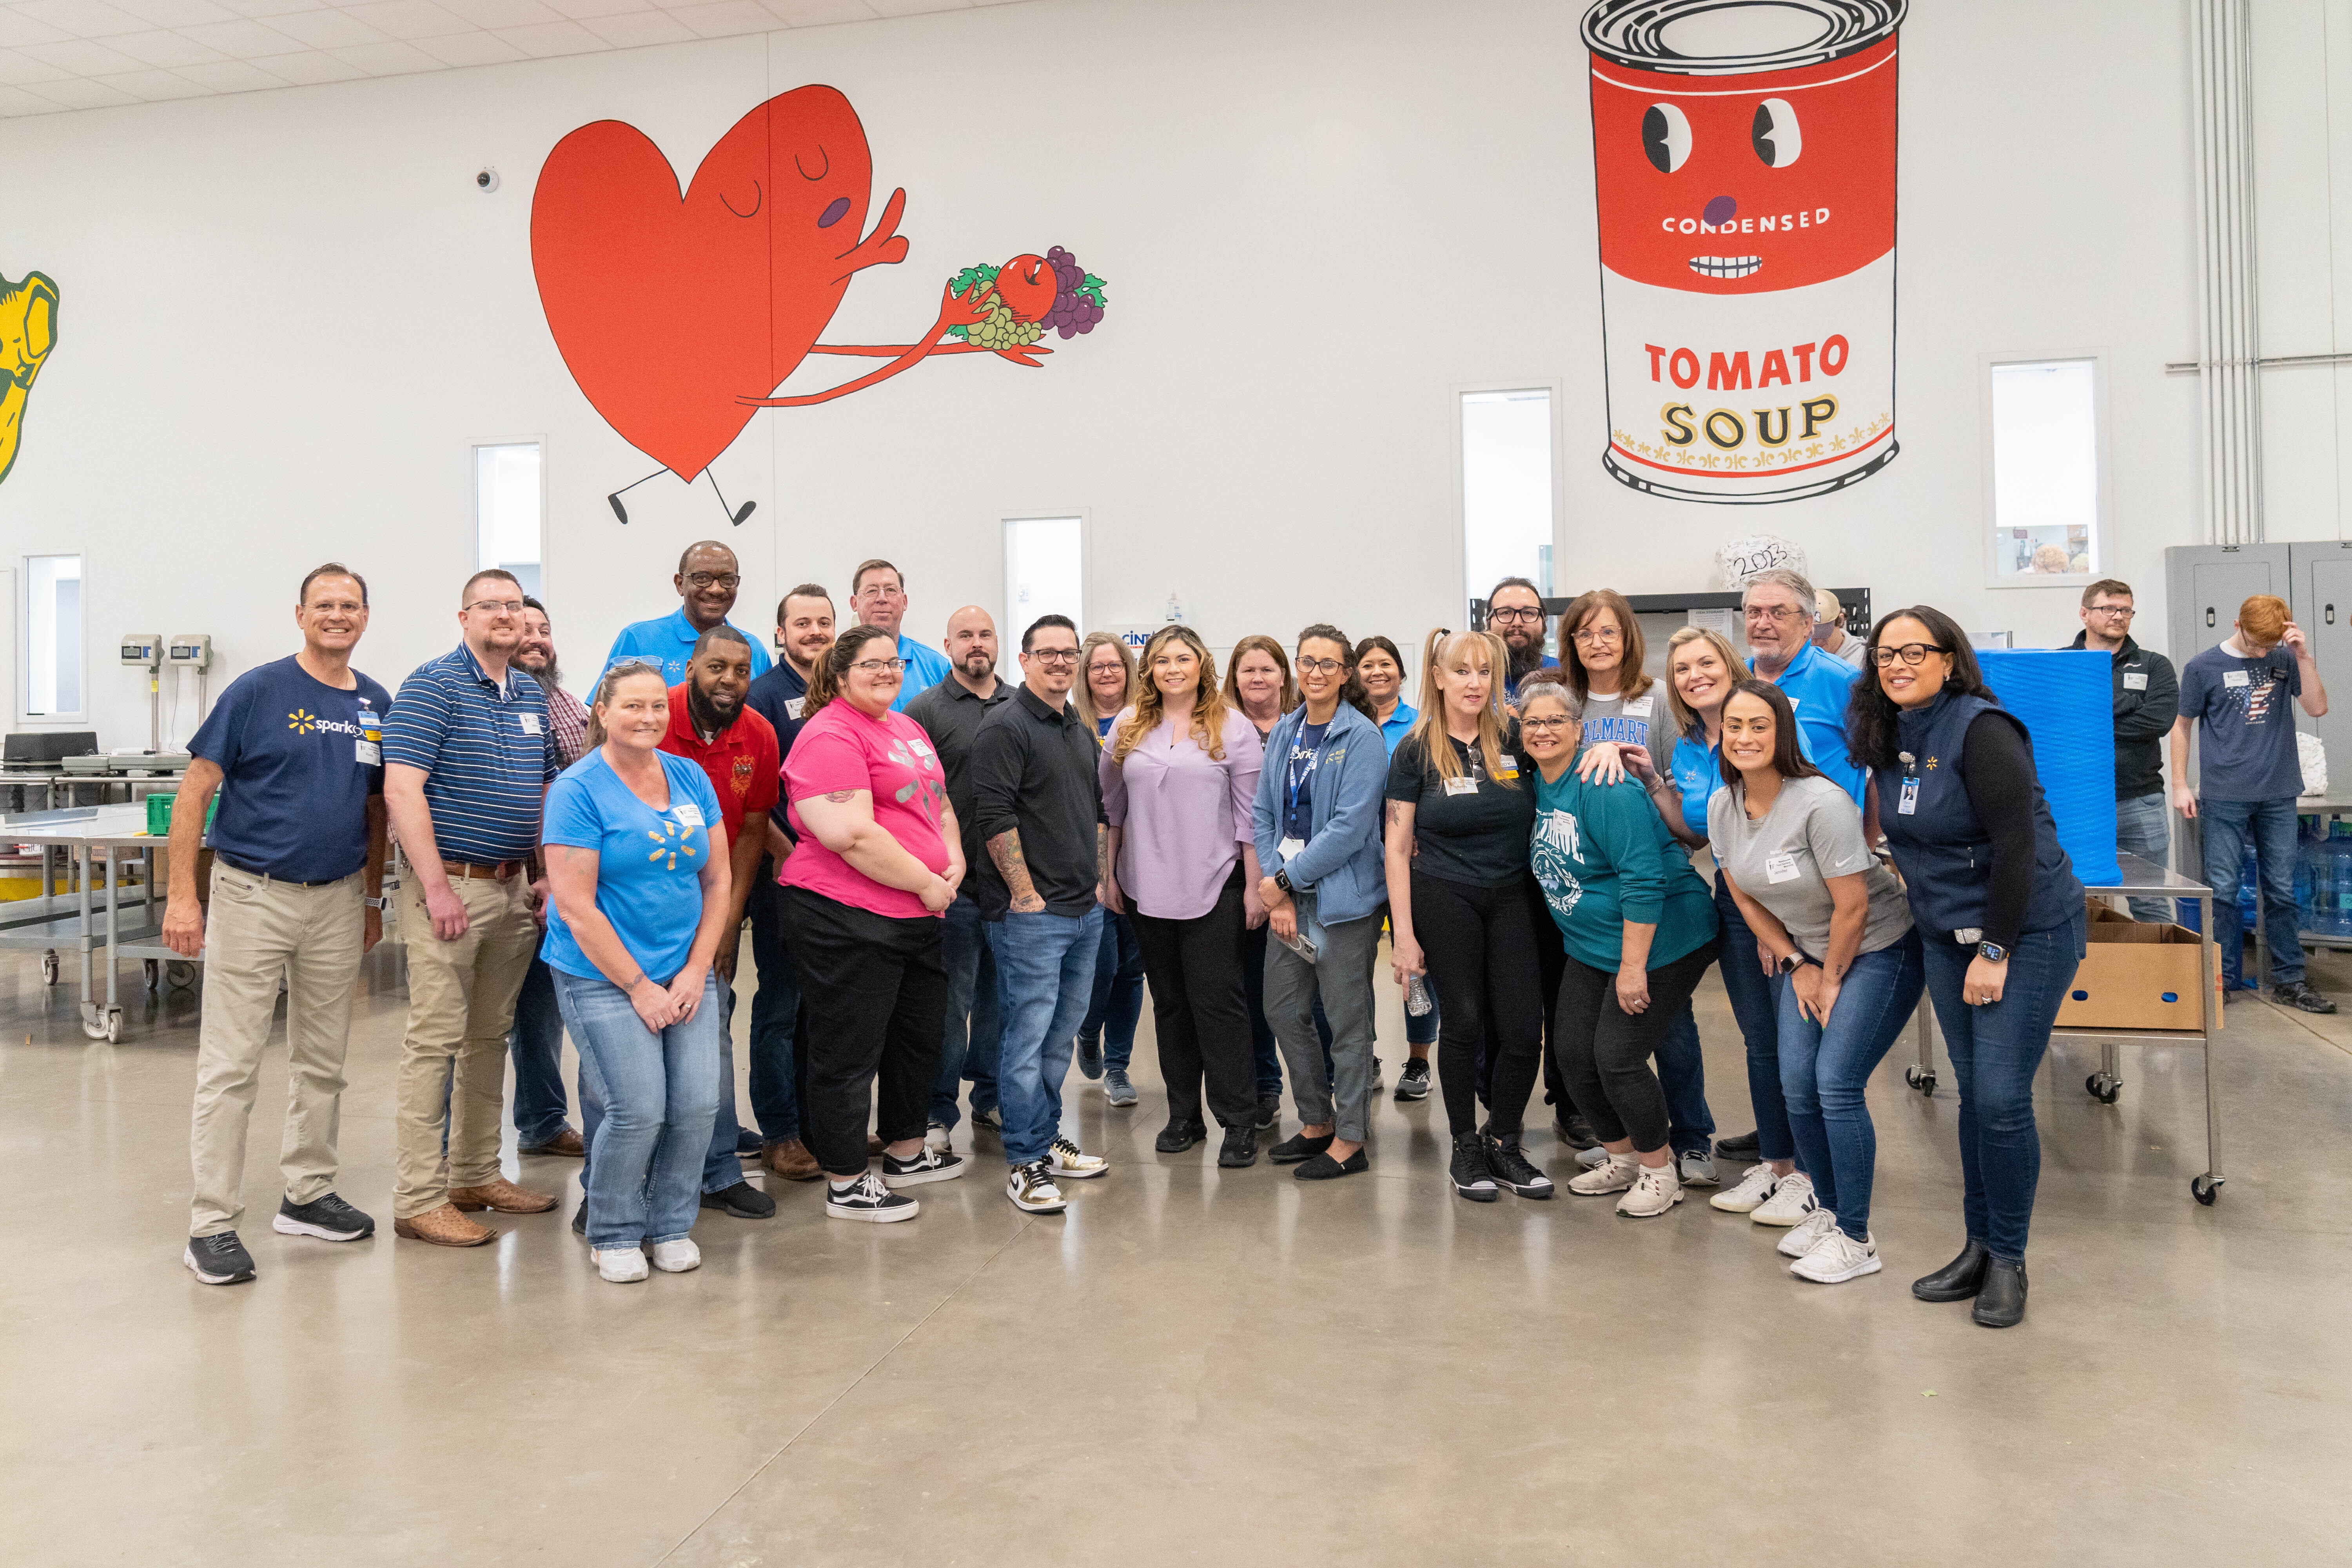 Walmart employees volunteering at the Central Texas Food Bank